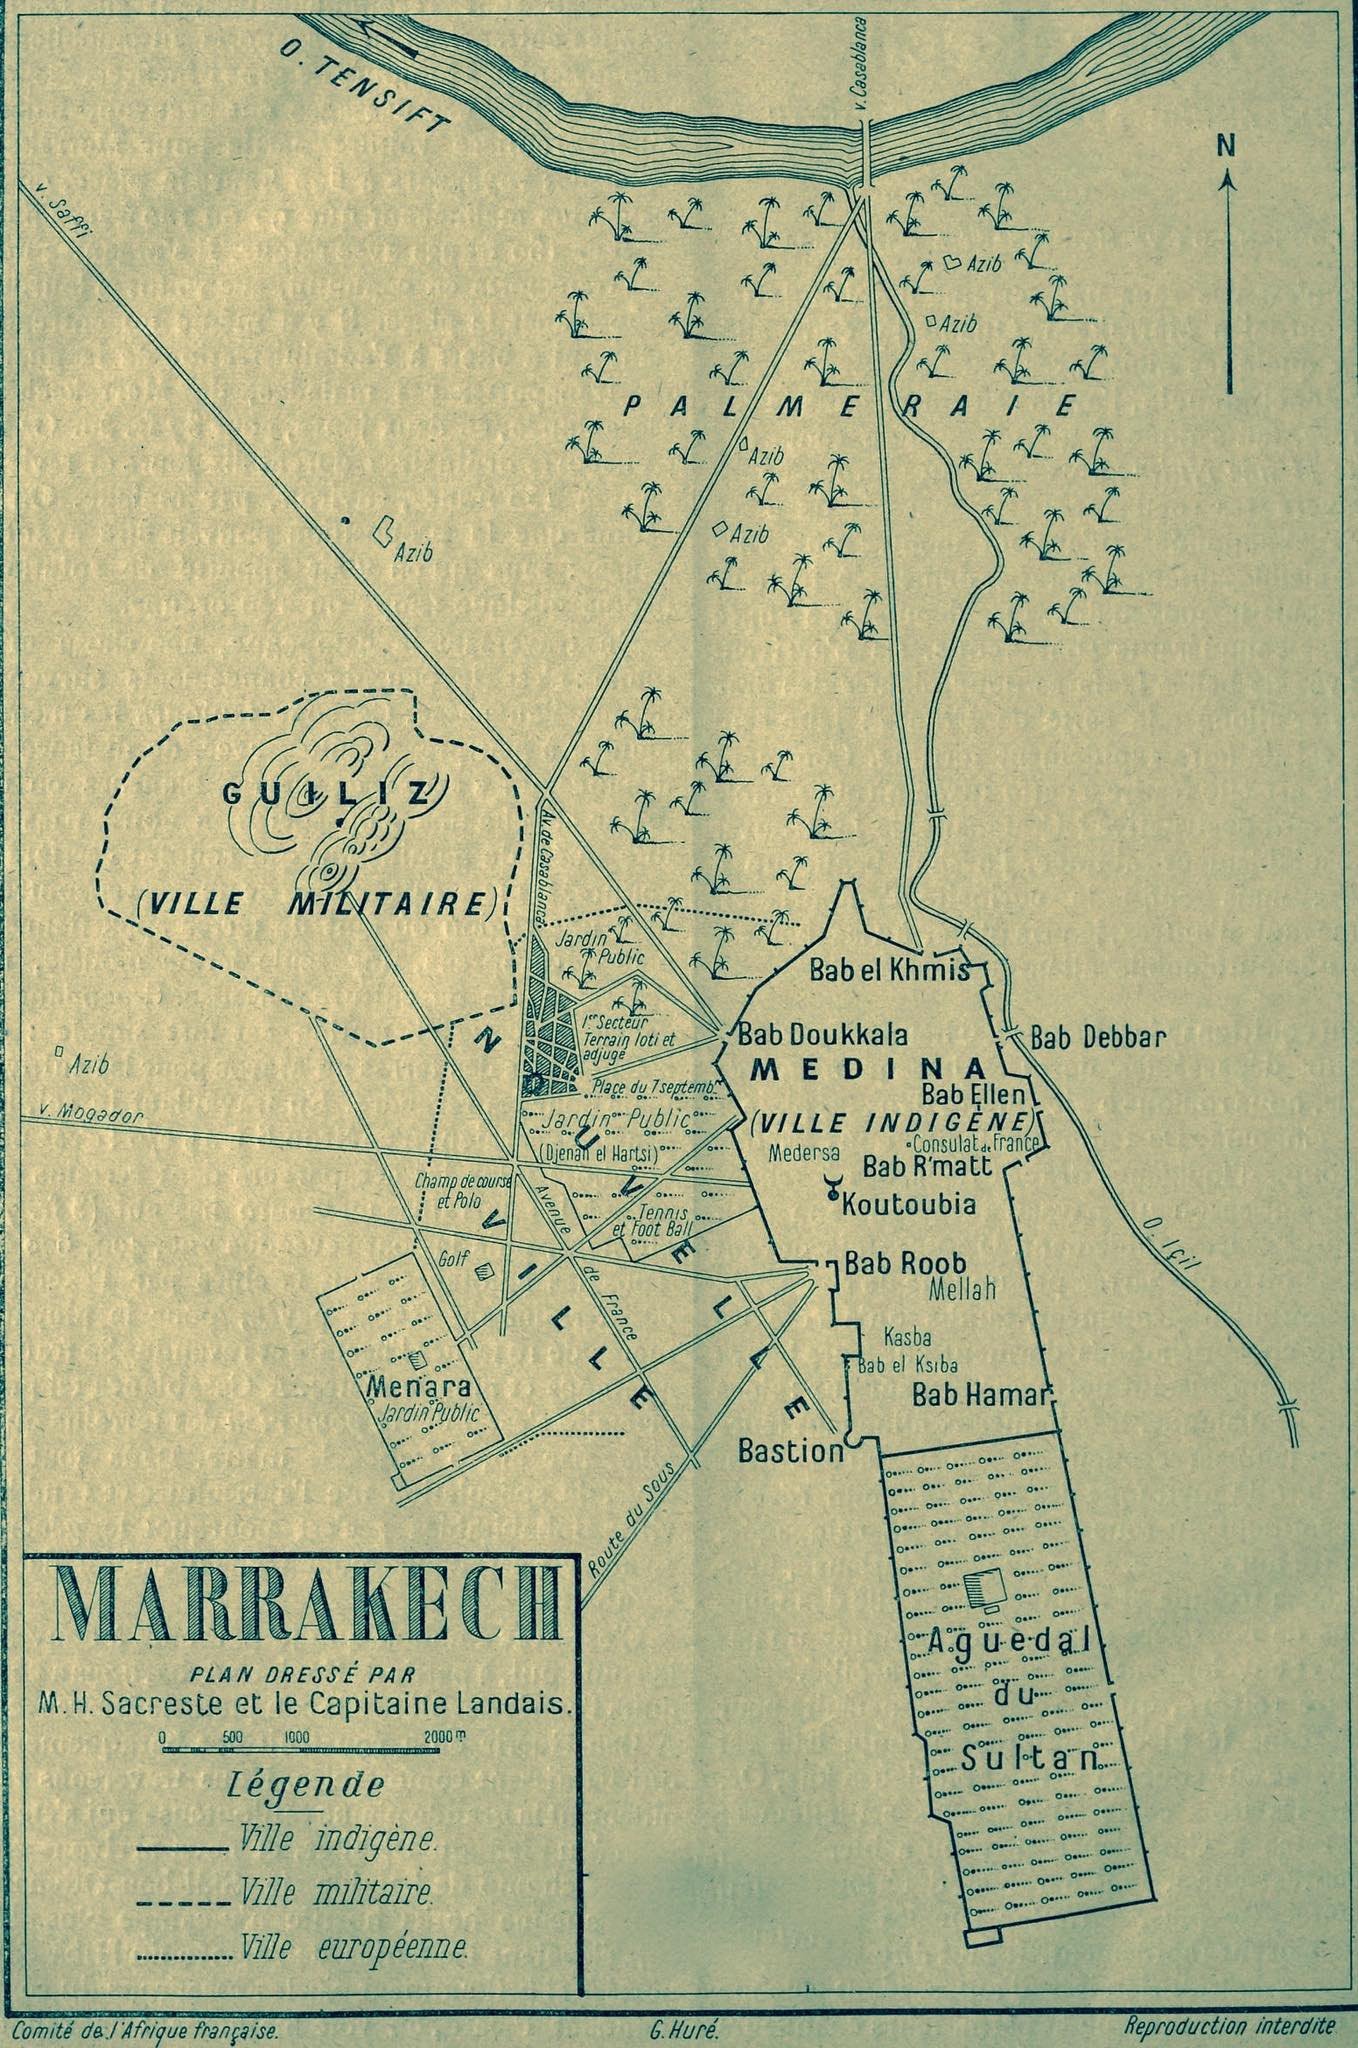 Marrakech map drawn up by Sacreste and Landais 1913 (?)